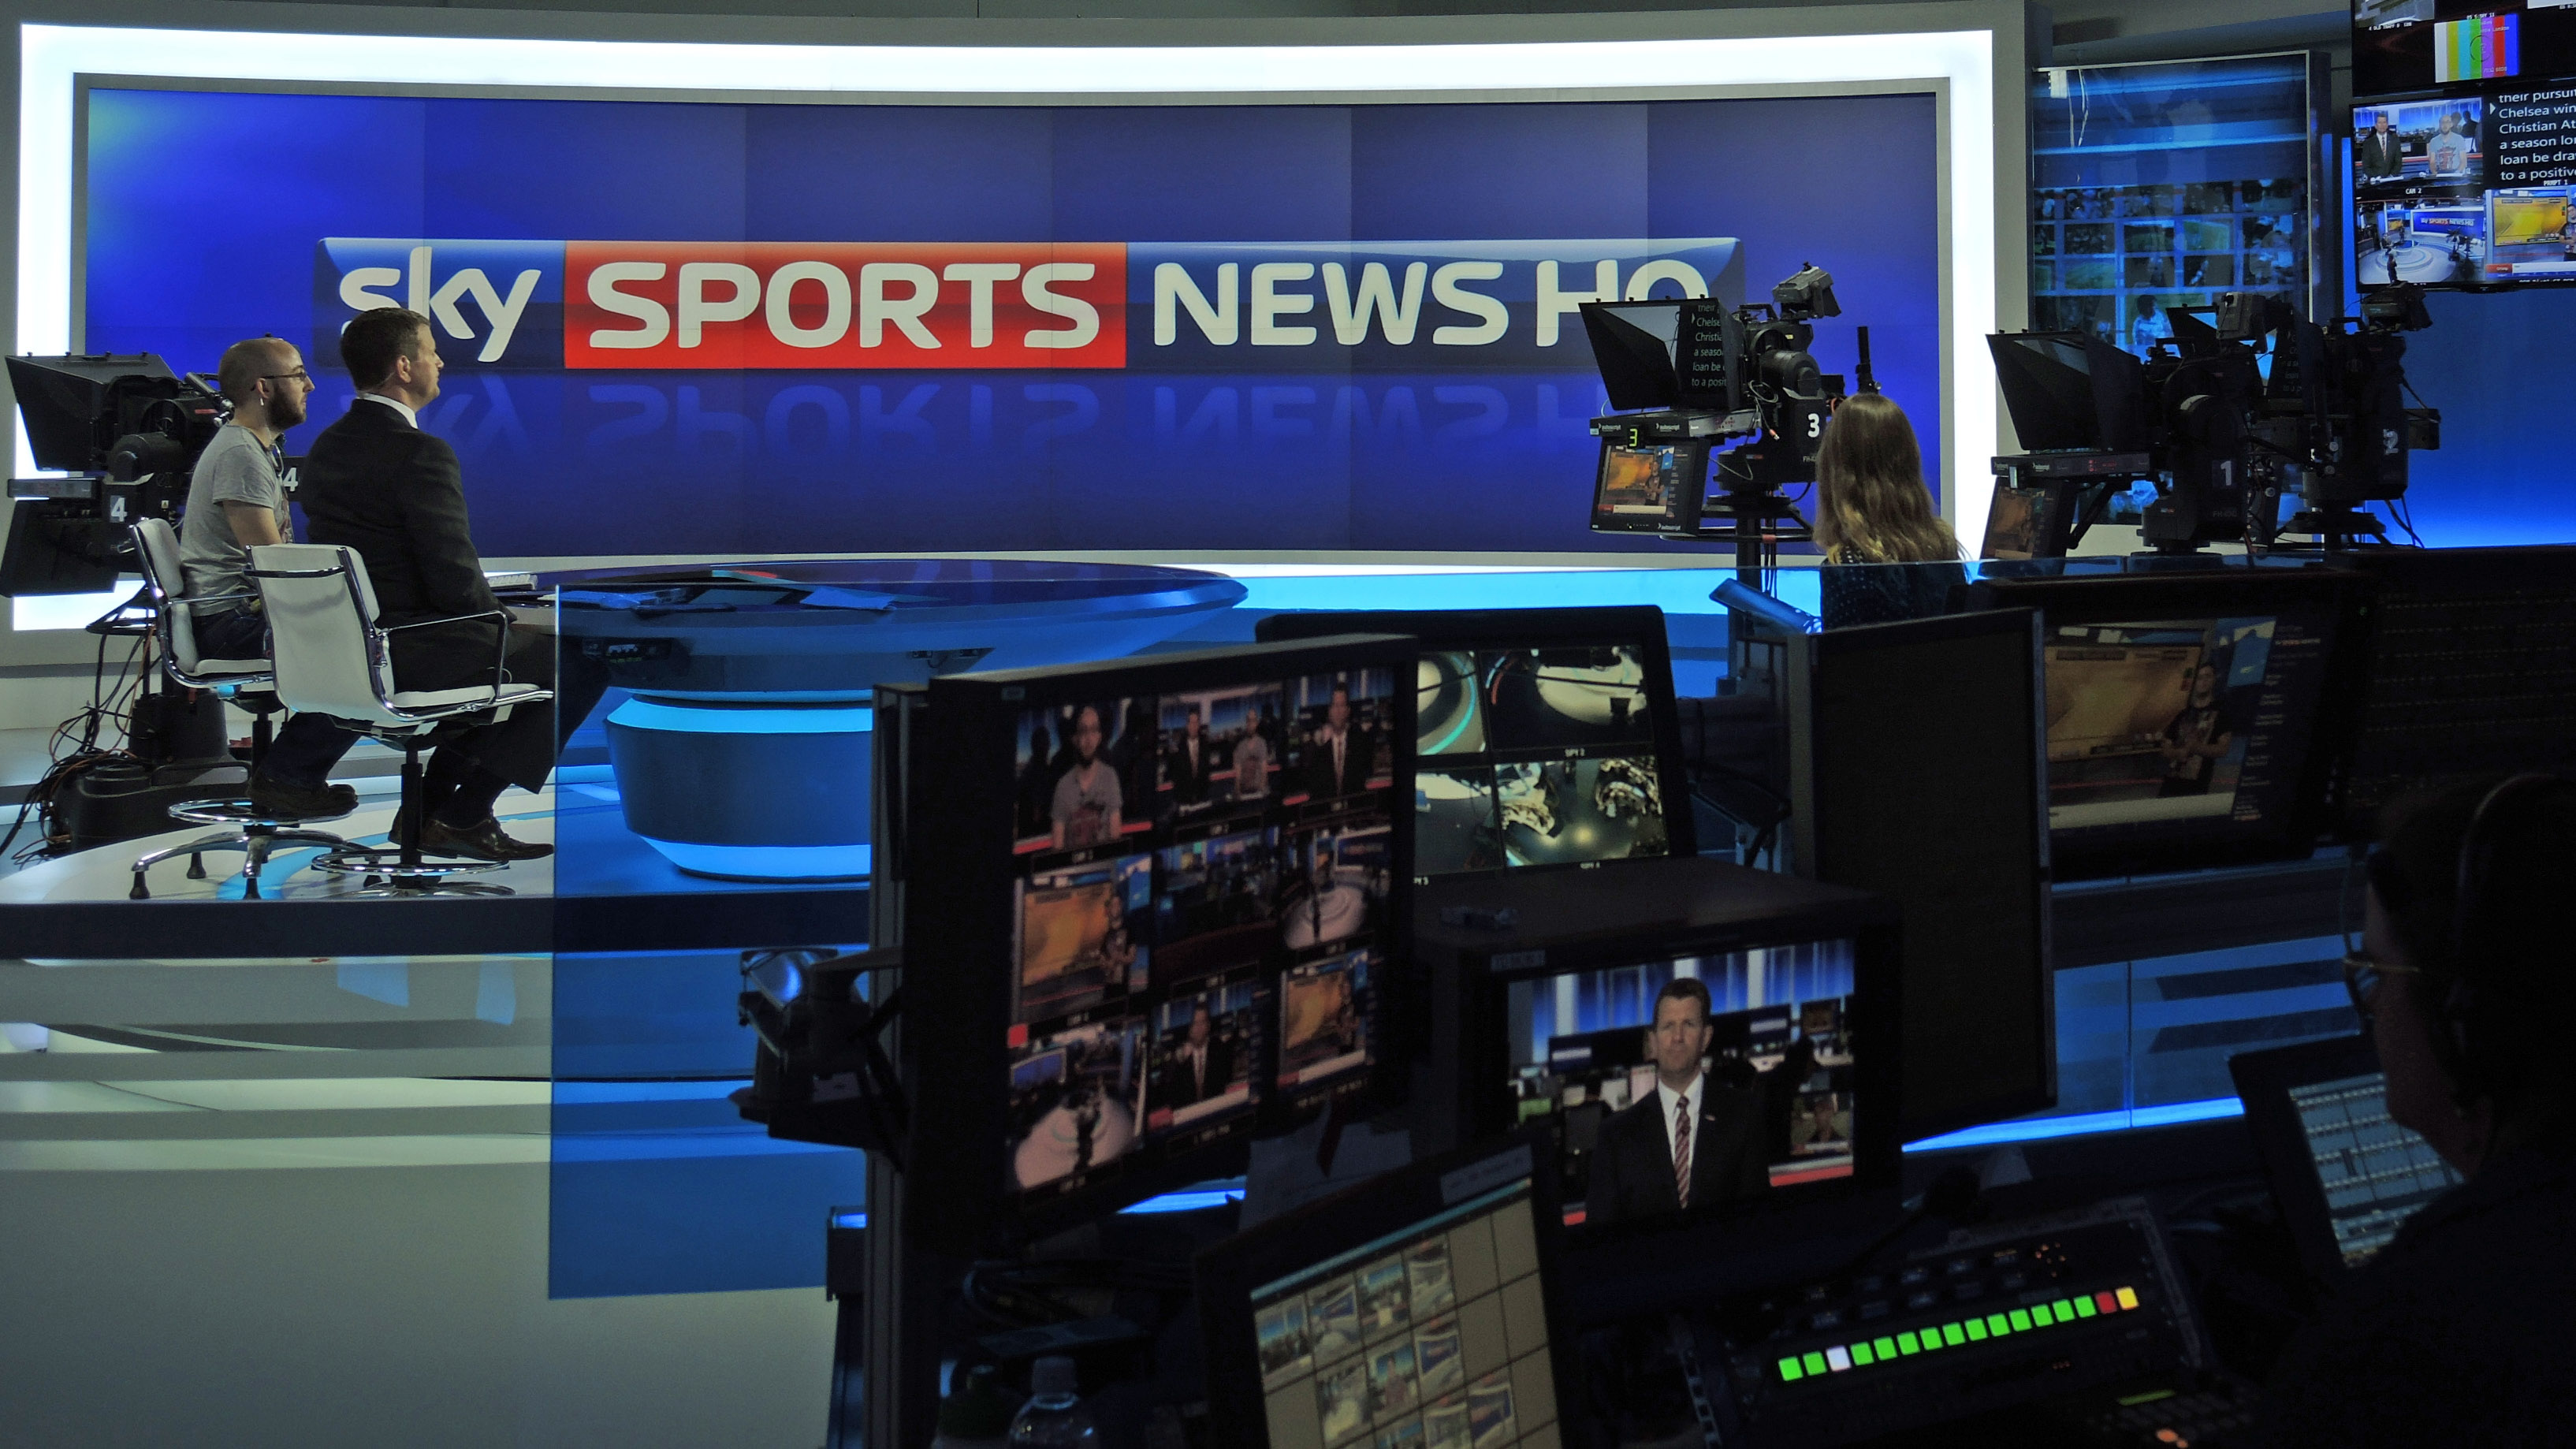 Sky sport live streaming. Студия Скай Спортс. Sky Sports newspaper. Телевизион спорт. Sky Sport News Studio.